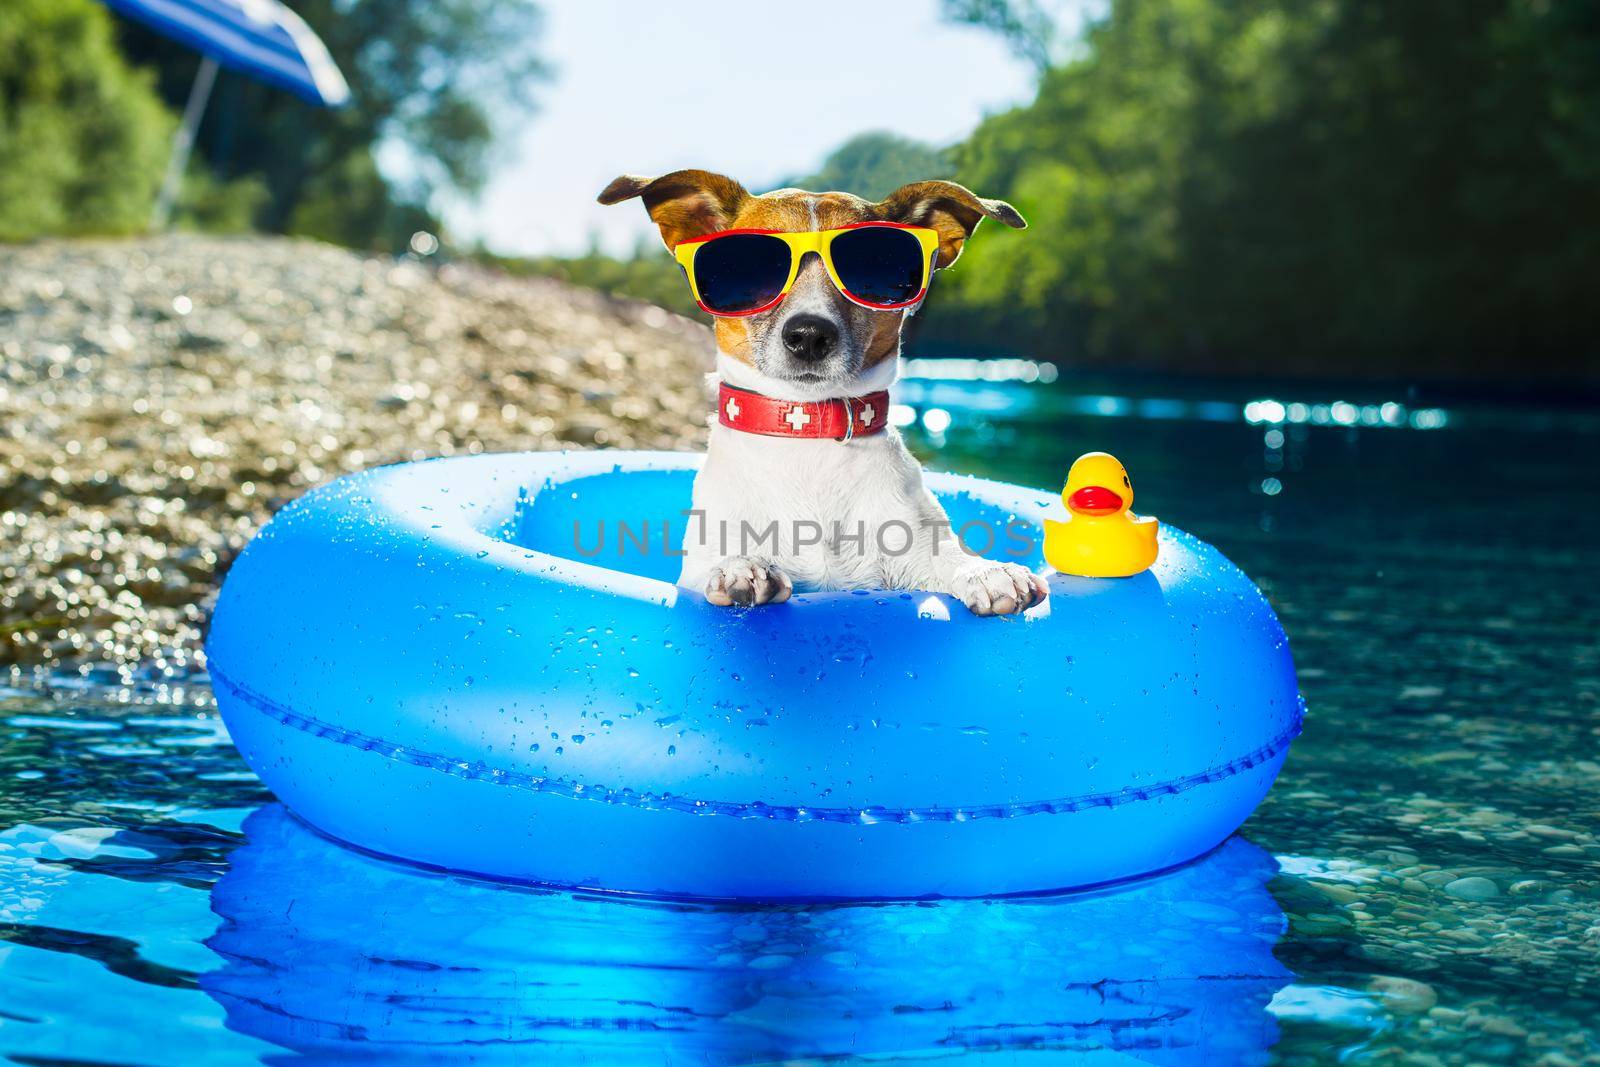 dog on  blue air mattress  in water refreshing